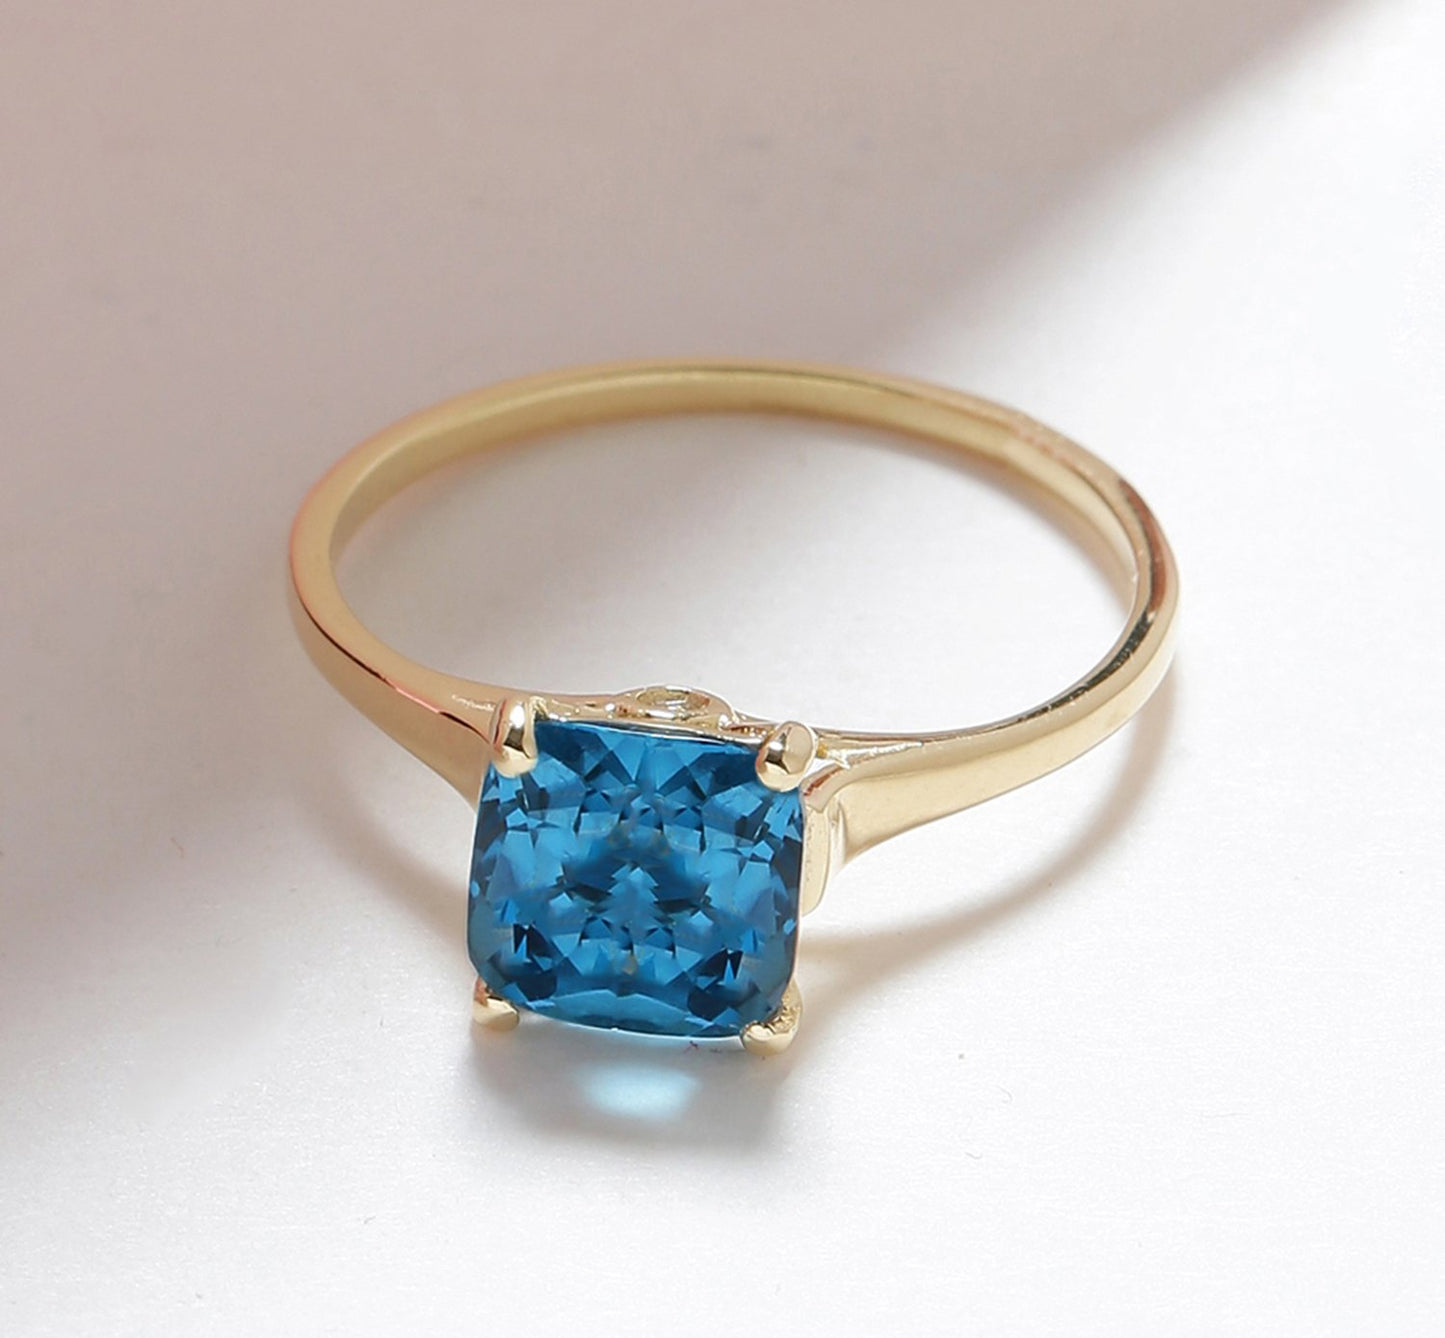 Tiramisu 1.81 Ct London Blue Topaz Solid 10k Yellow Gold Ring Jewelry